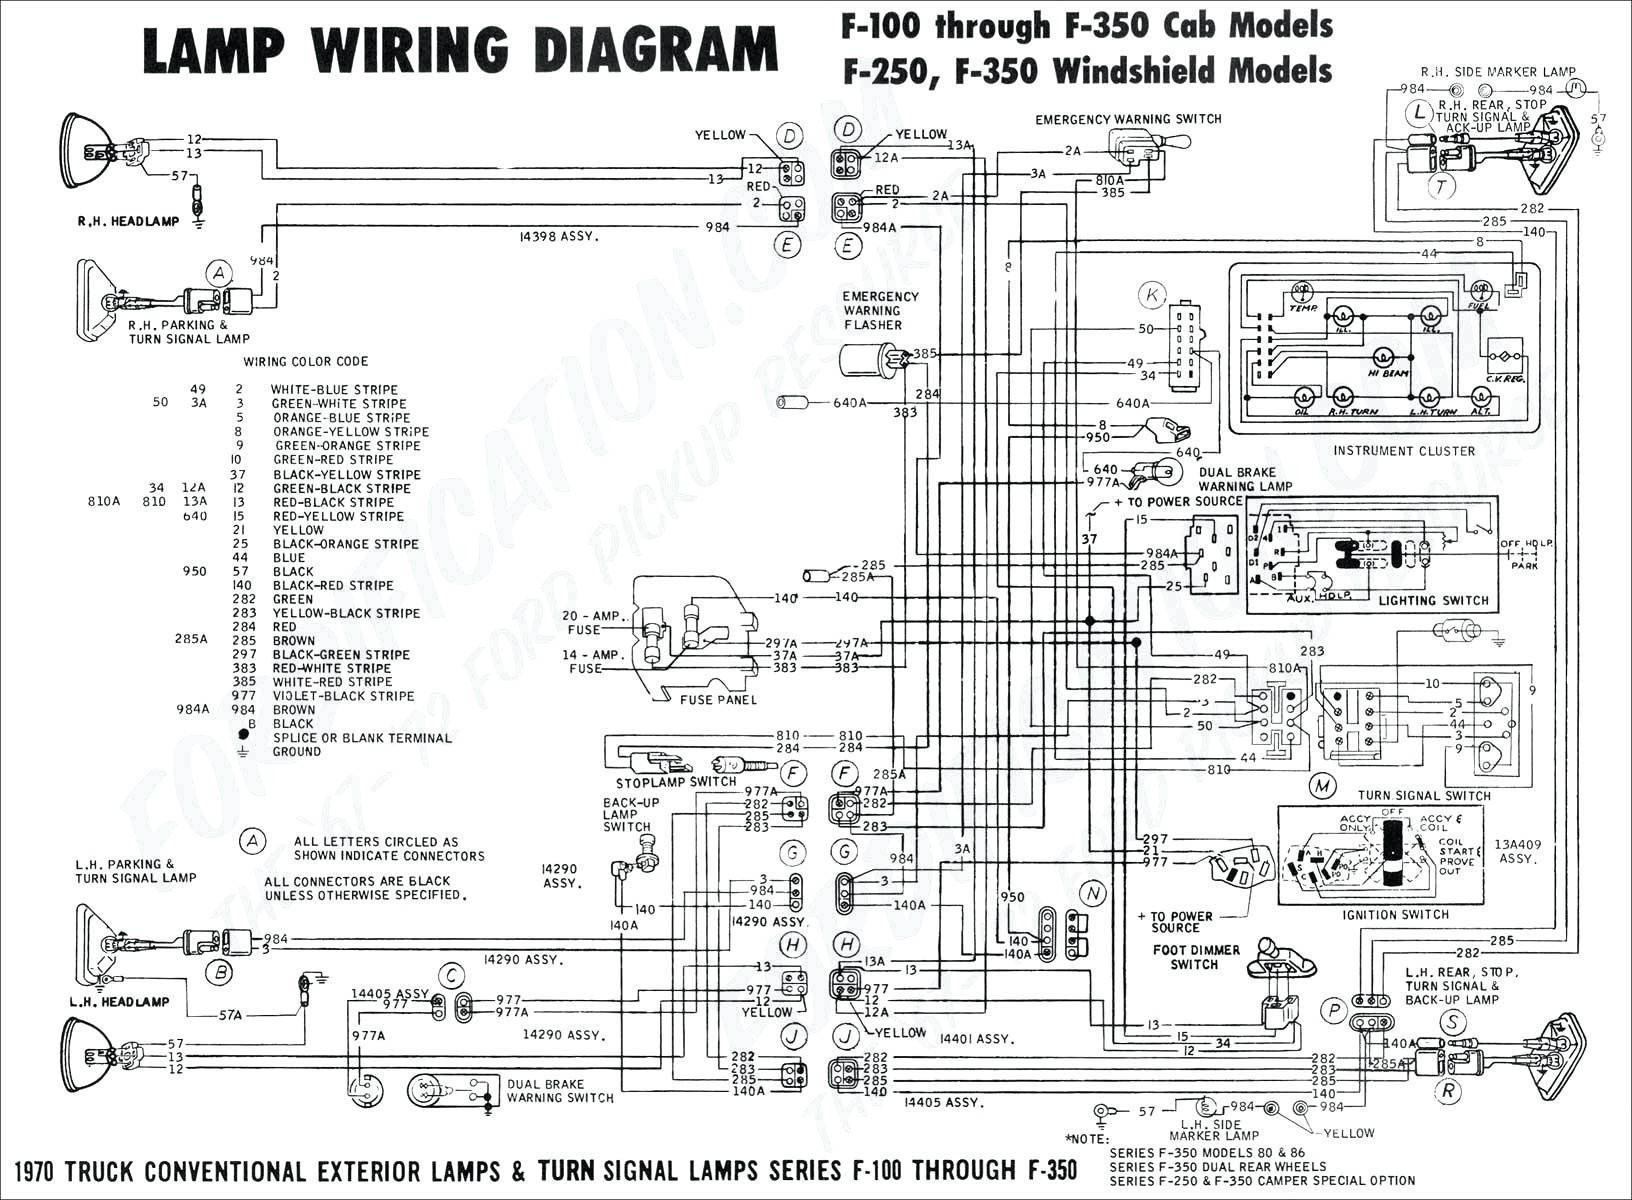 Semi Truck Trailer Plug Wiring Diagram Unique Wiring Diagram Semi Trailer Plug Best New Wiring Diagram